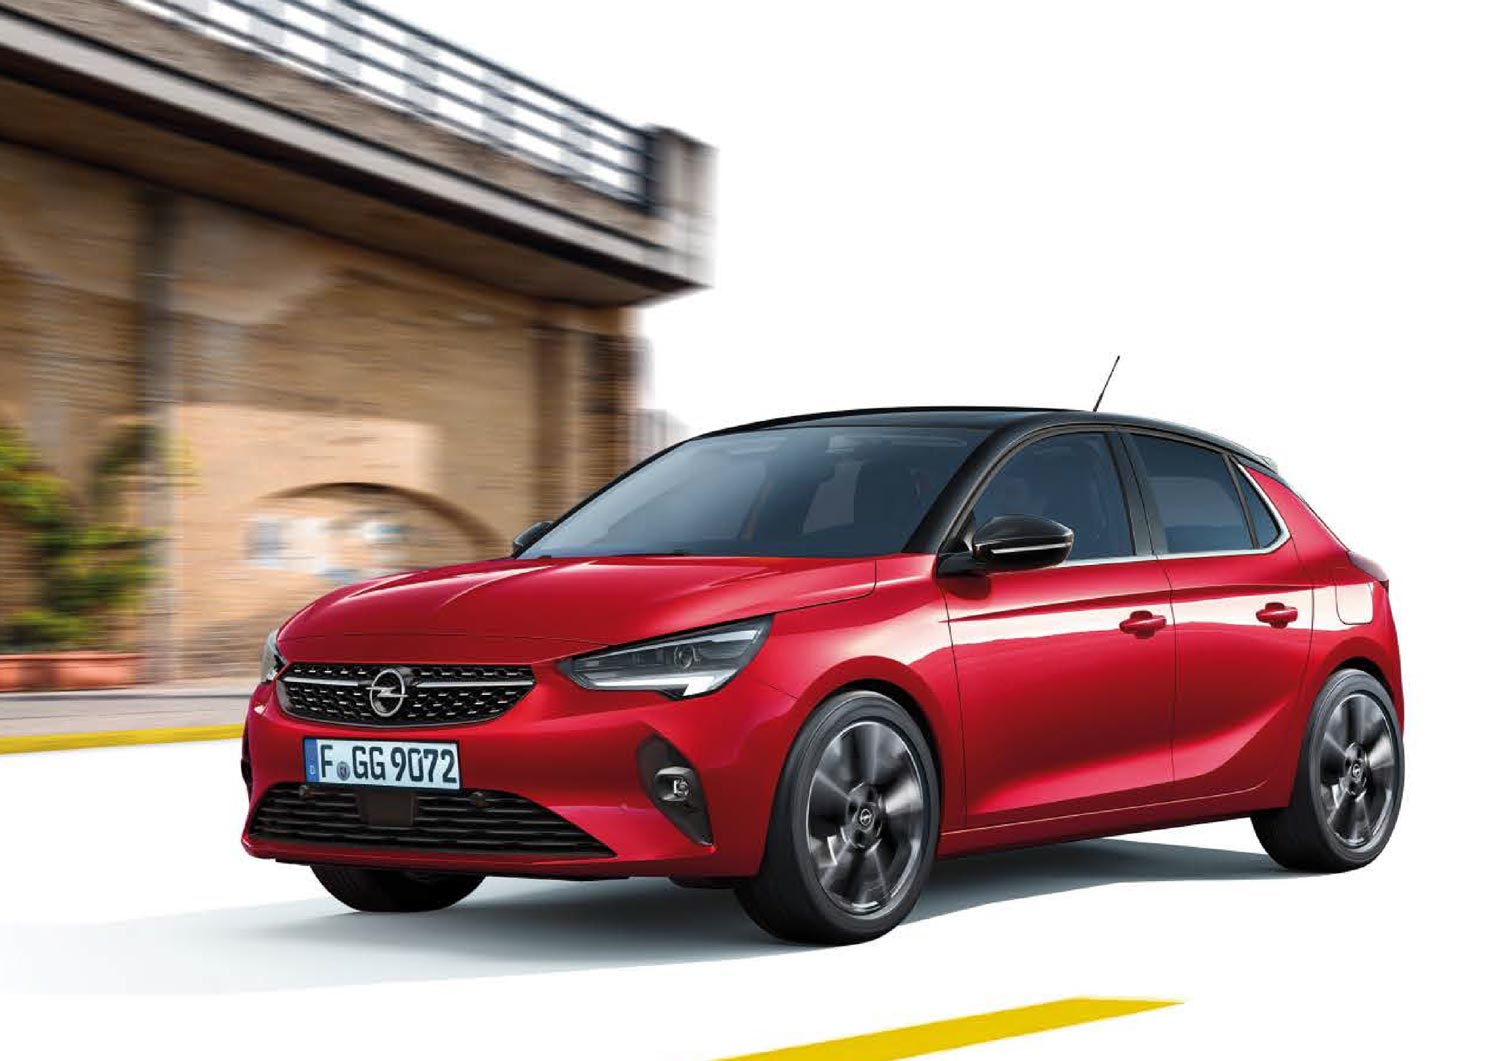 Oferta Renting Opel Corsa tecnologia